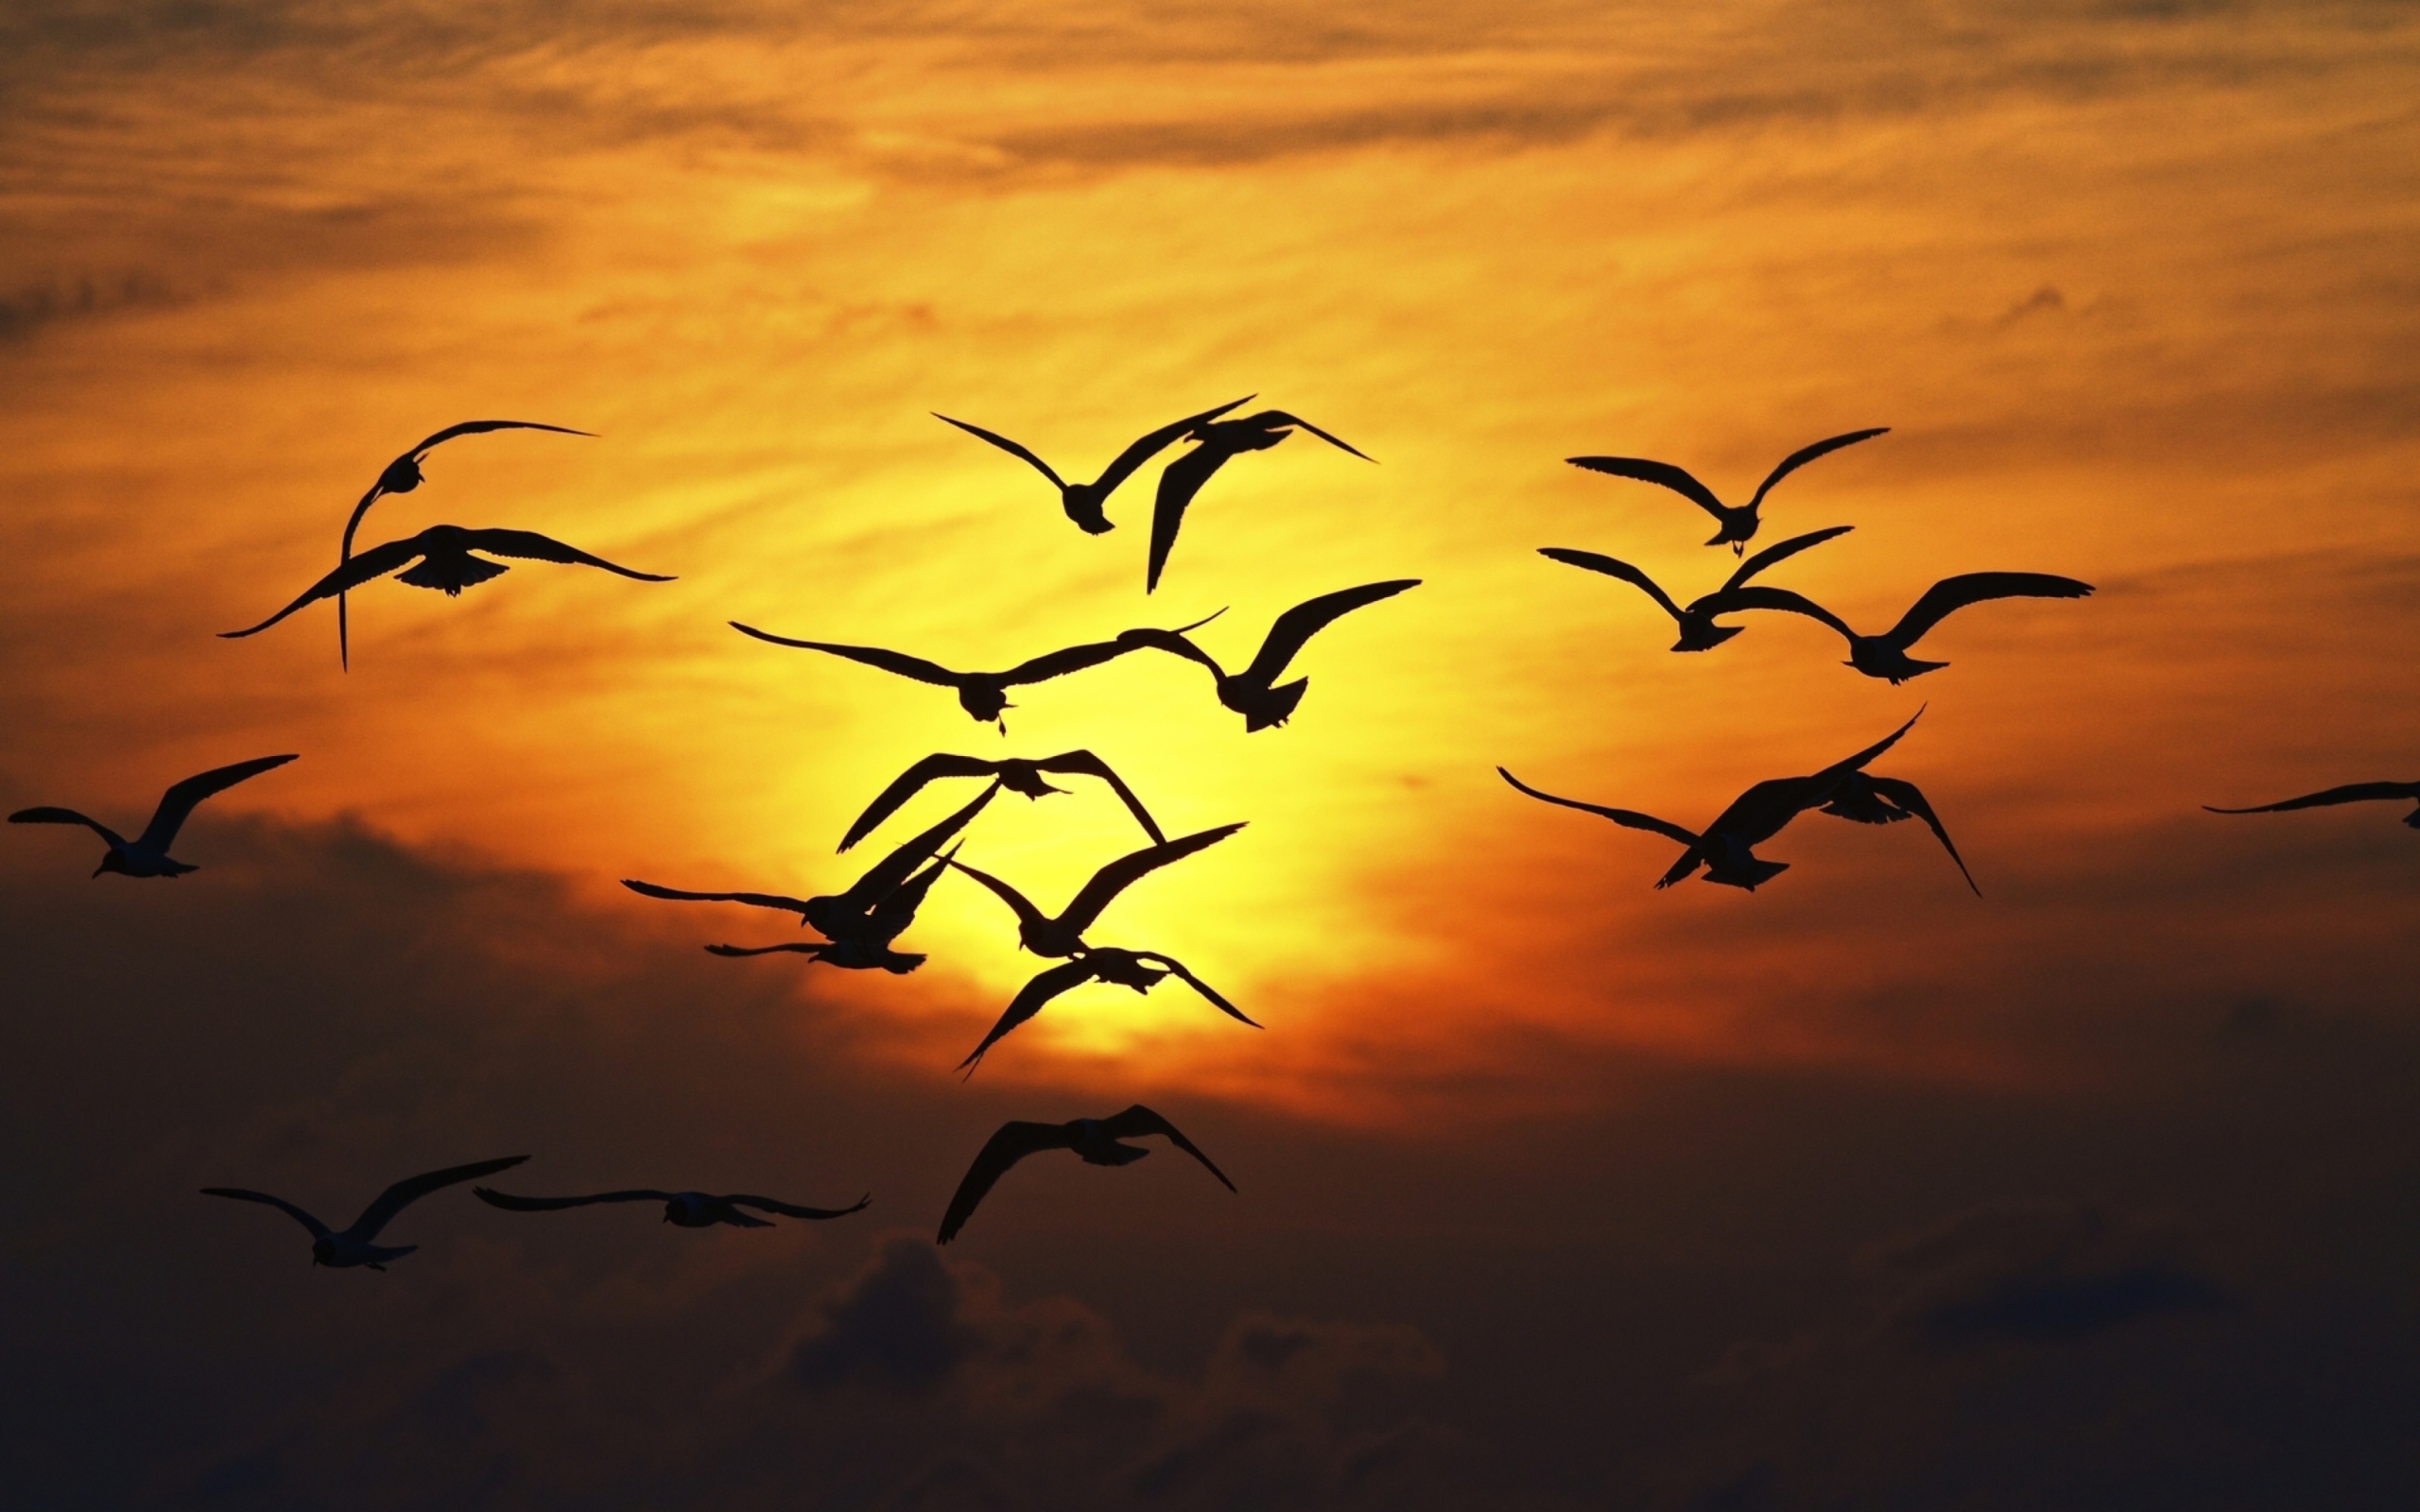 Обои Birds Silhouettes At Sunset 2560x1600